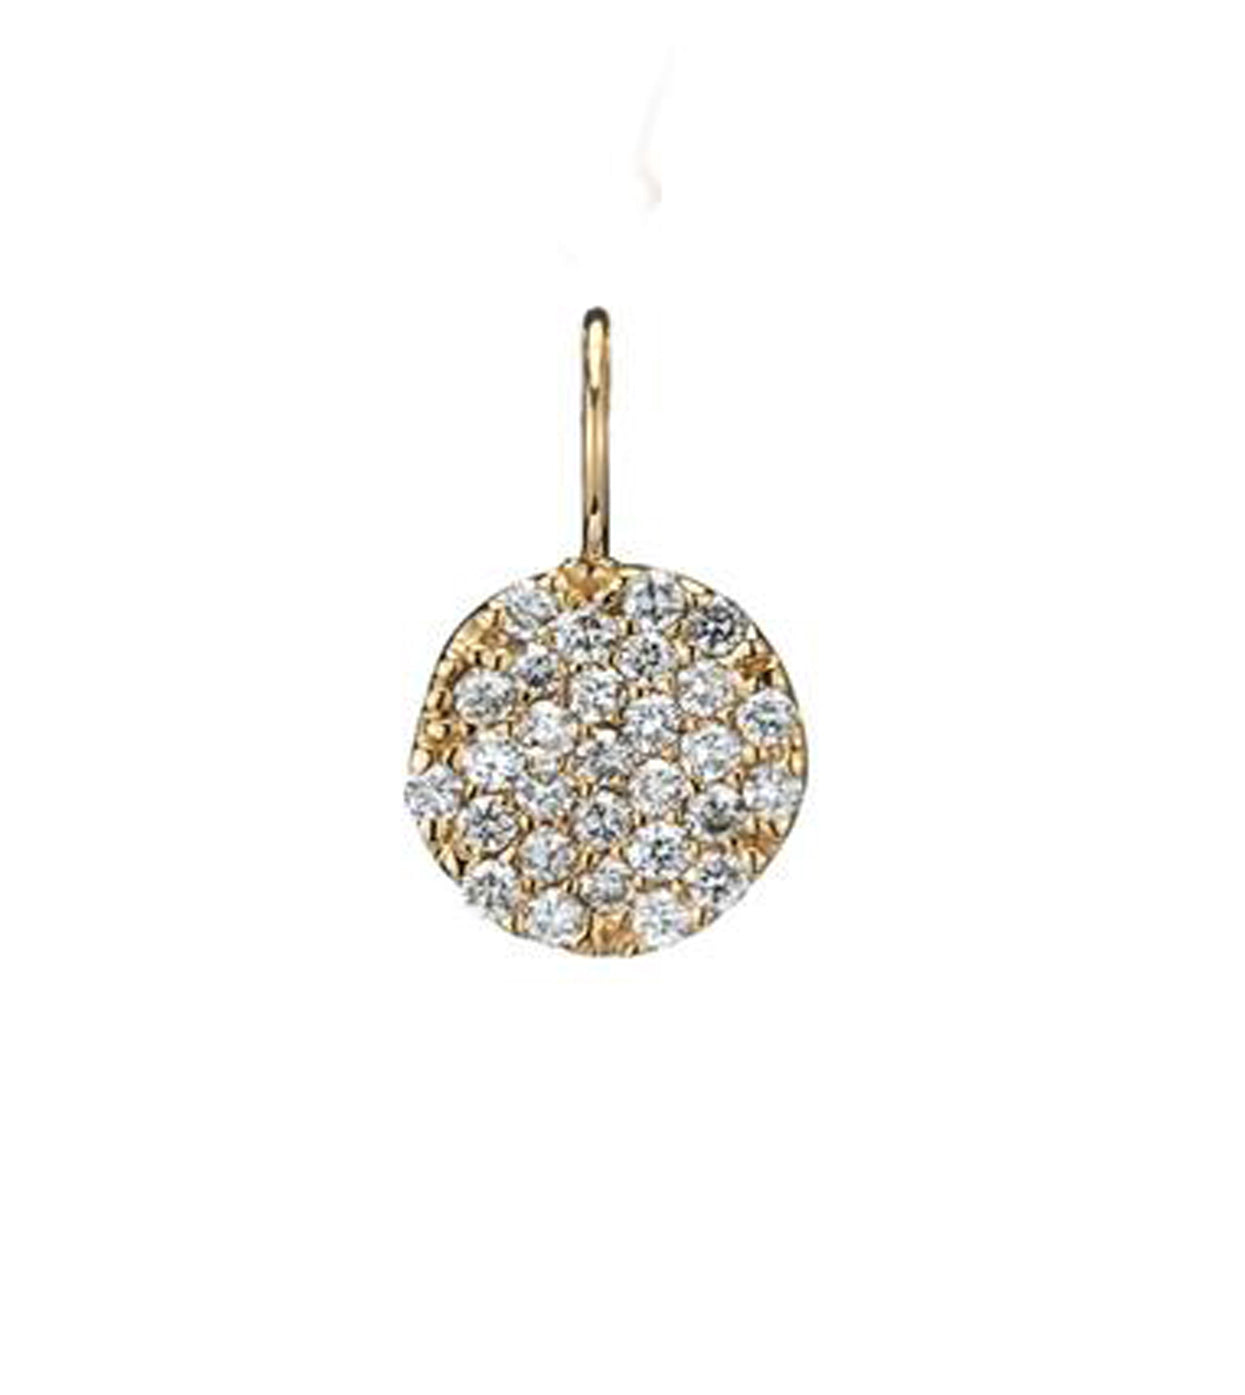 ALI GRACE Petite Round Gold & Pavé Diamond Charm